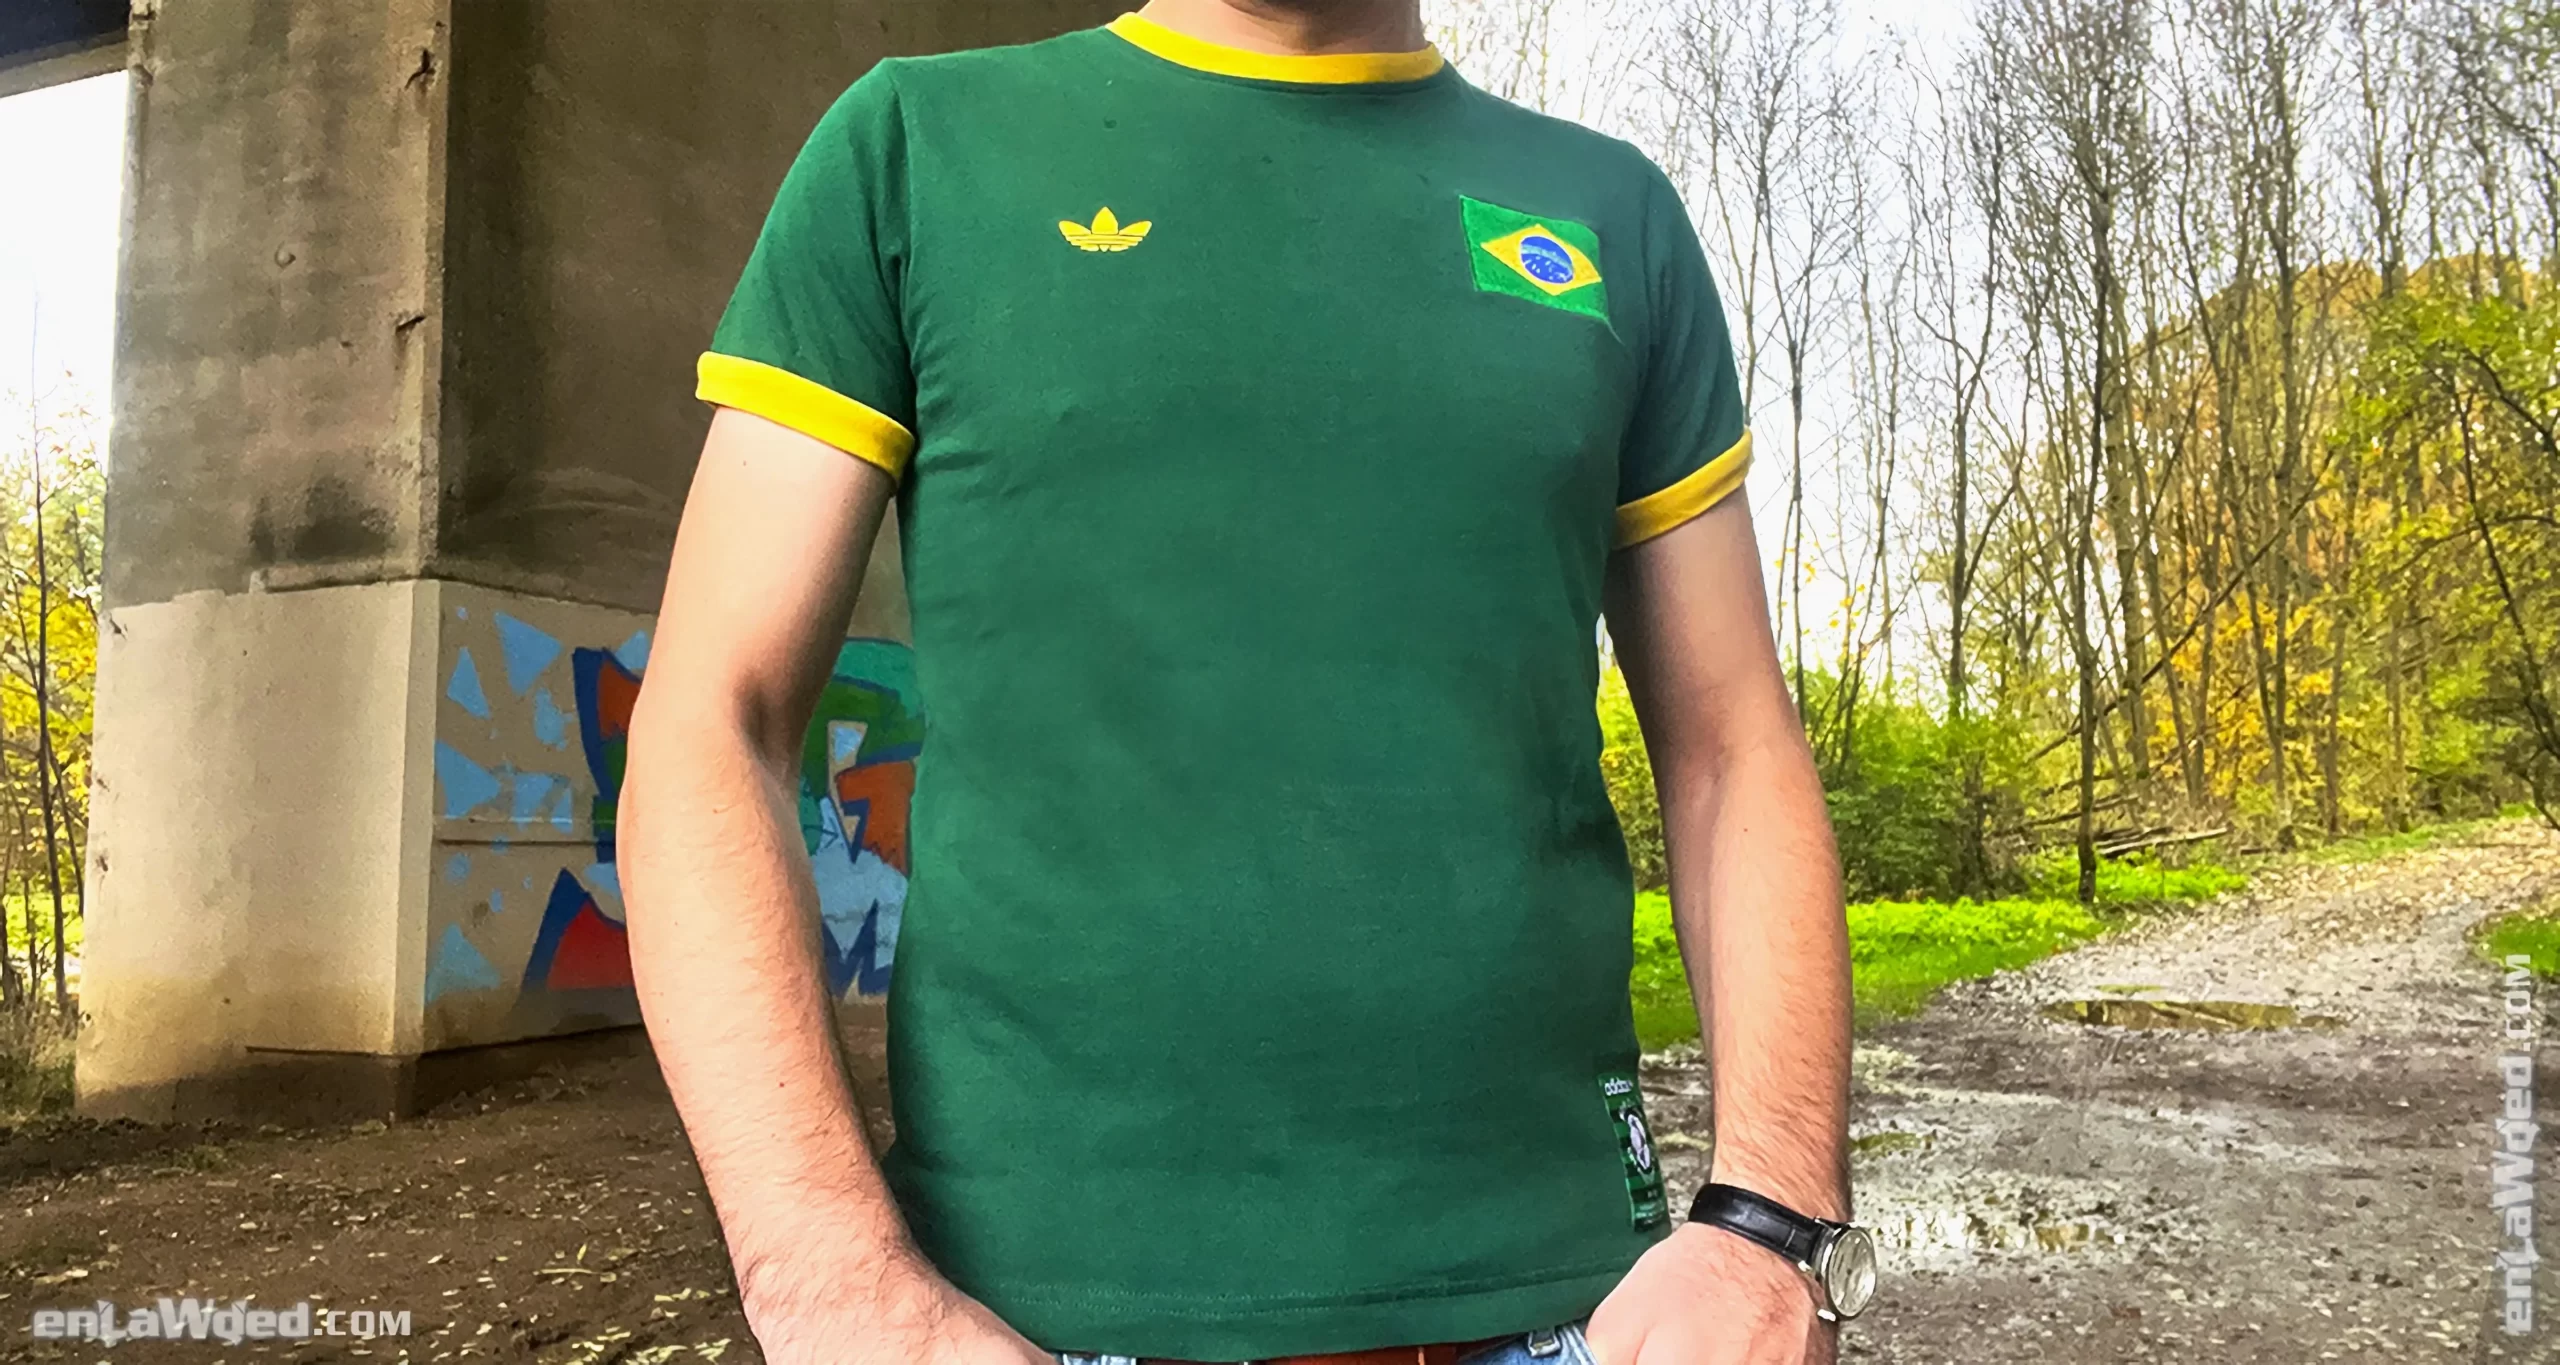 Men’s 2006 Brasil ’70 Green T-Shirt by Adidas Originals: Direct (EnLawded.com file #lp1meoc3126140p8u5pvsmunr)